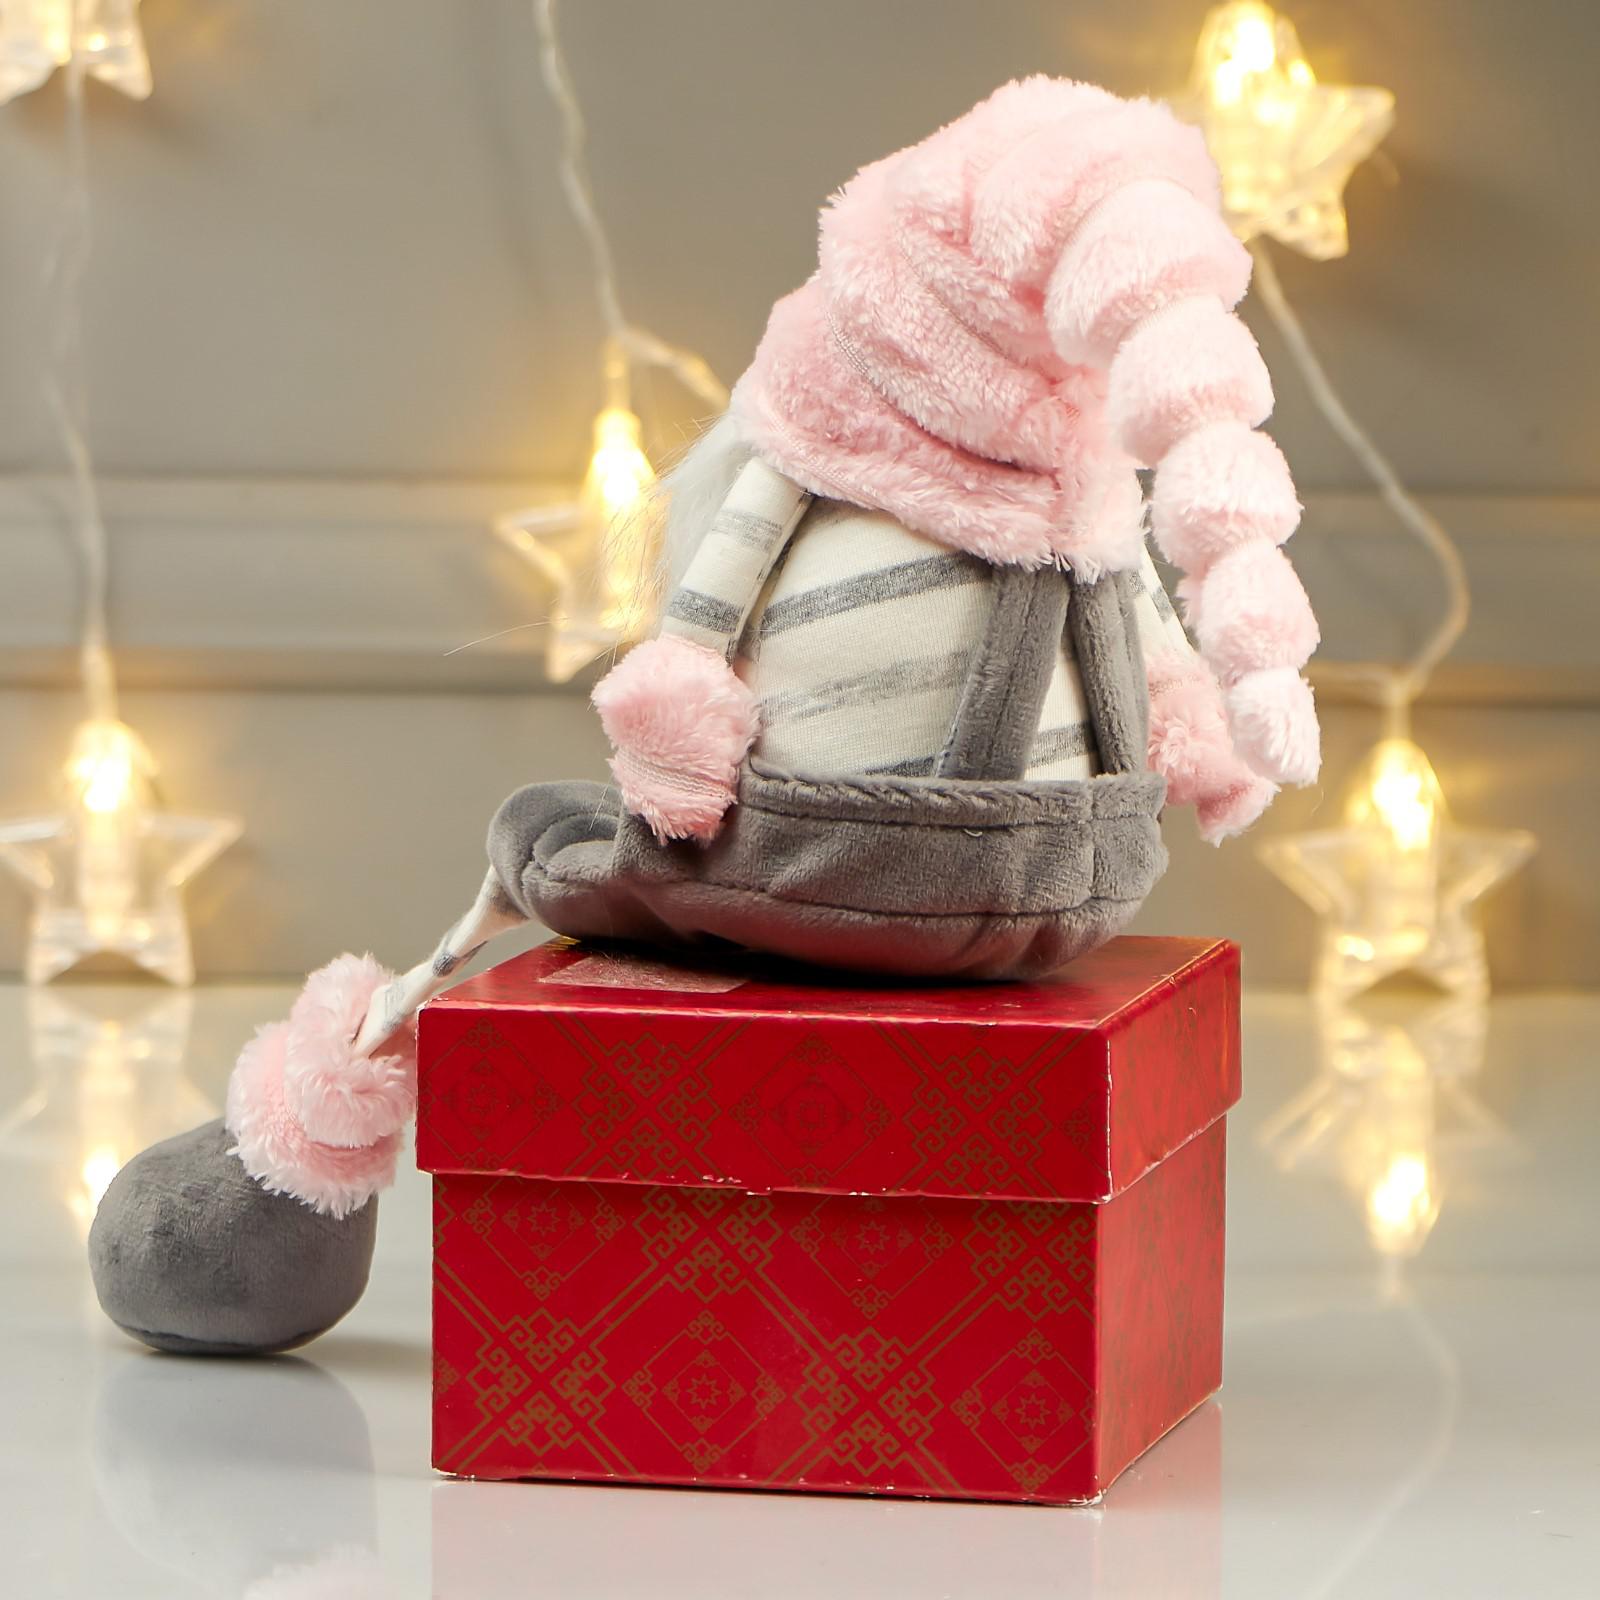 Кукла интерьерная Зимнее волшебство «Дедушка в сером комбинезоне и розовом колпаке» 39х17х11 см - фото 4